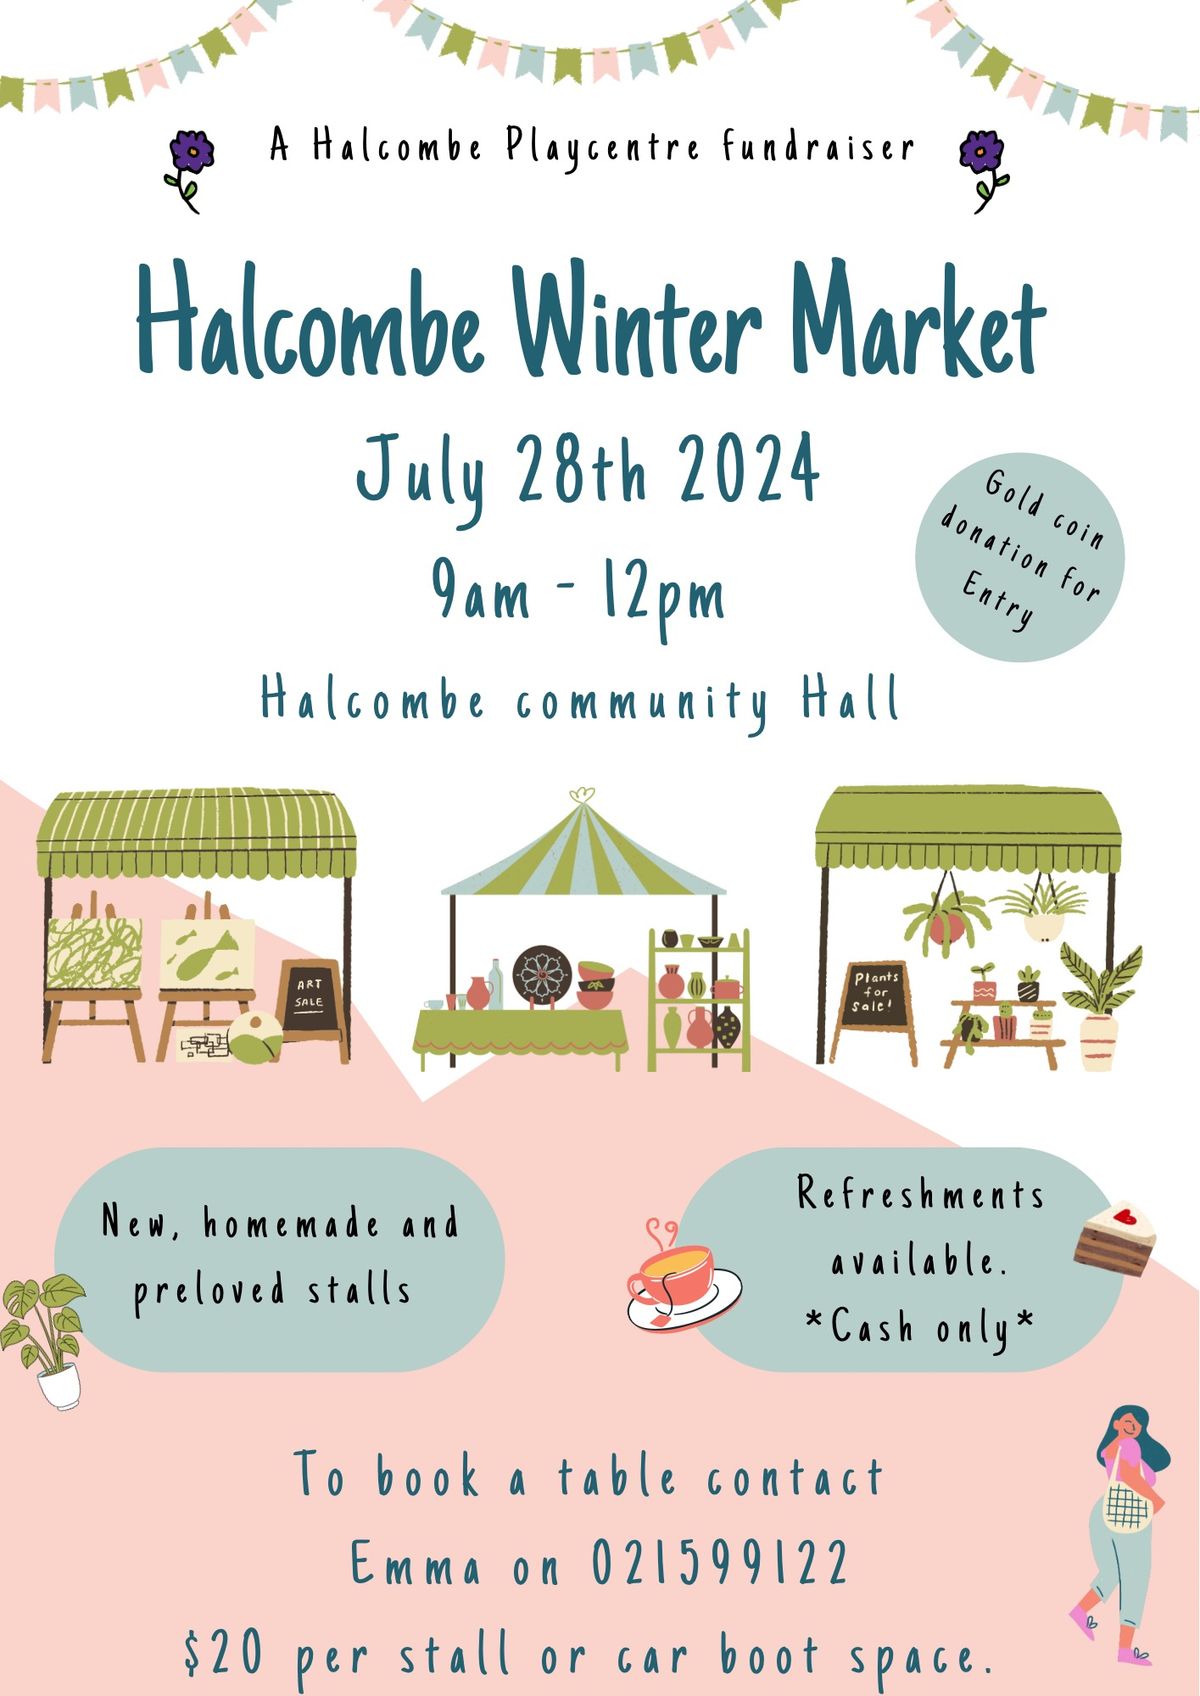 Halcombe Playcentre Mid Winter Market 